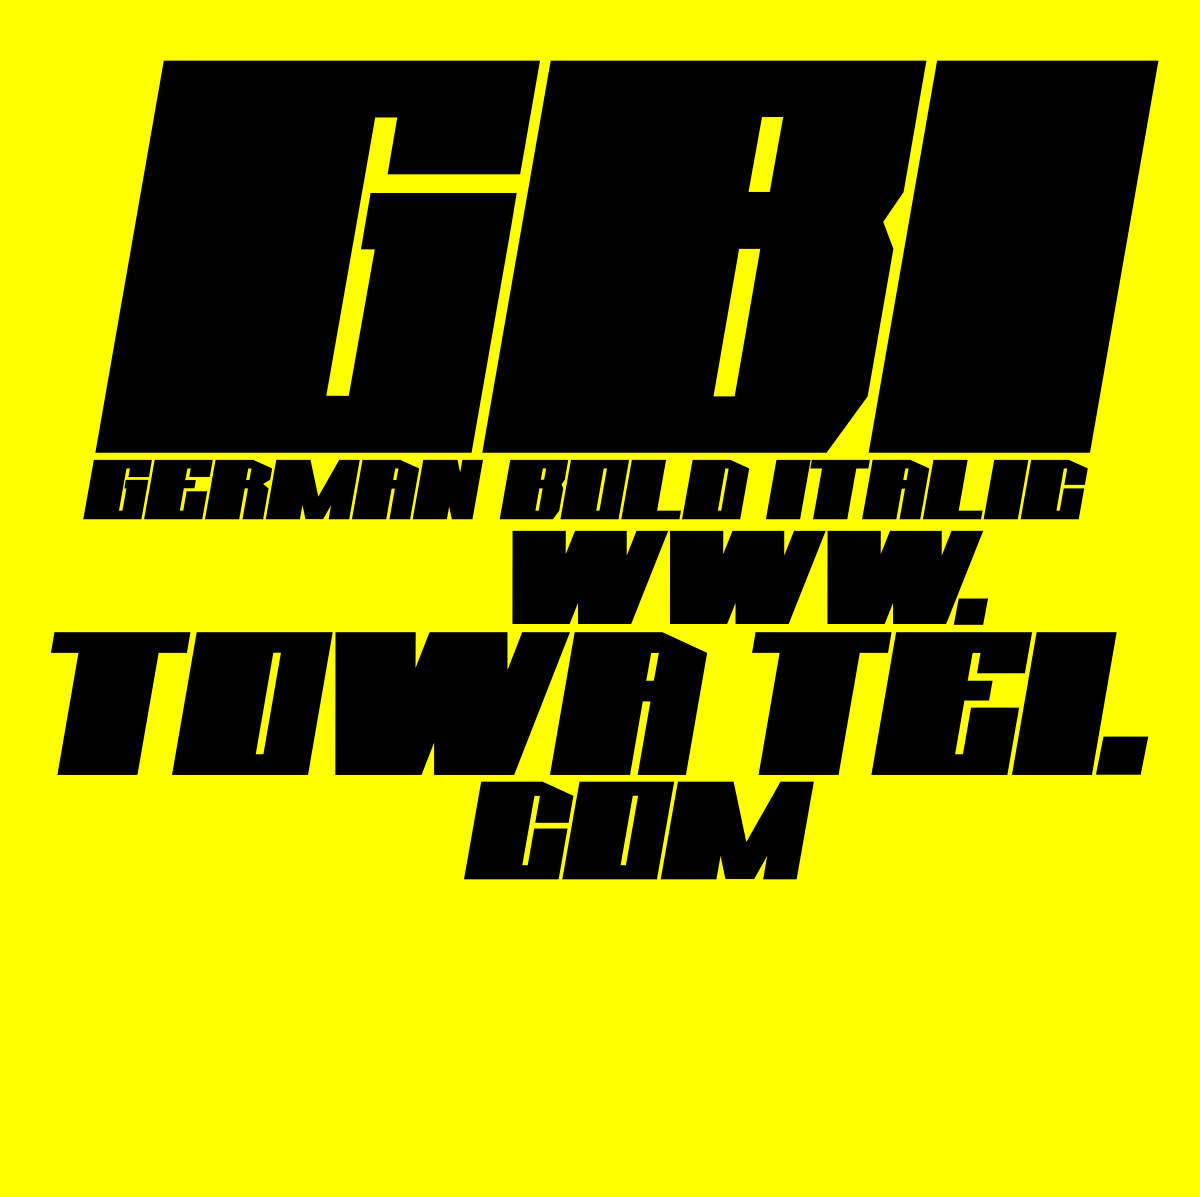 Towa Tei ft. featuring Kylie Minogue GBI (German Bold Italic) cover artwork